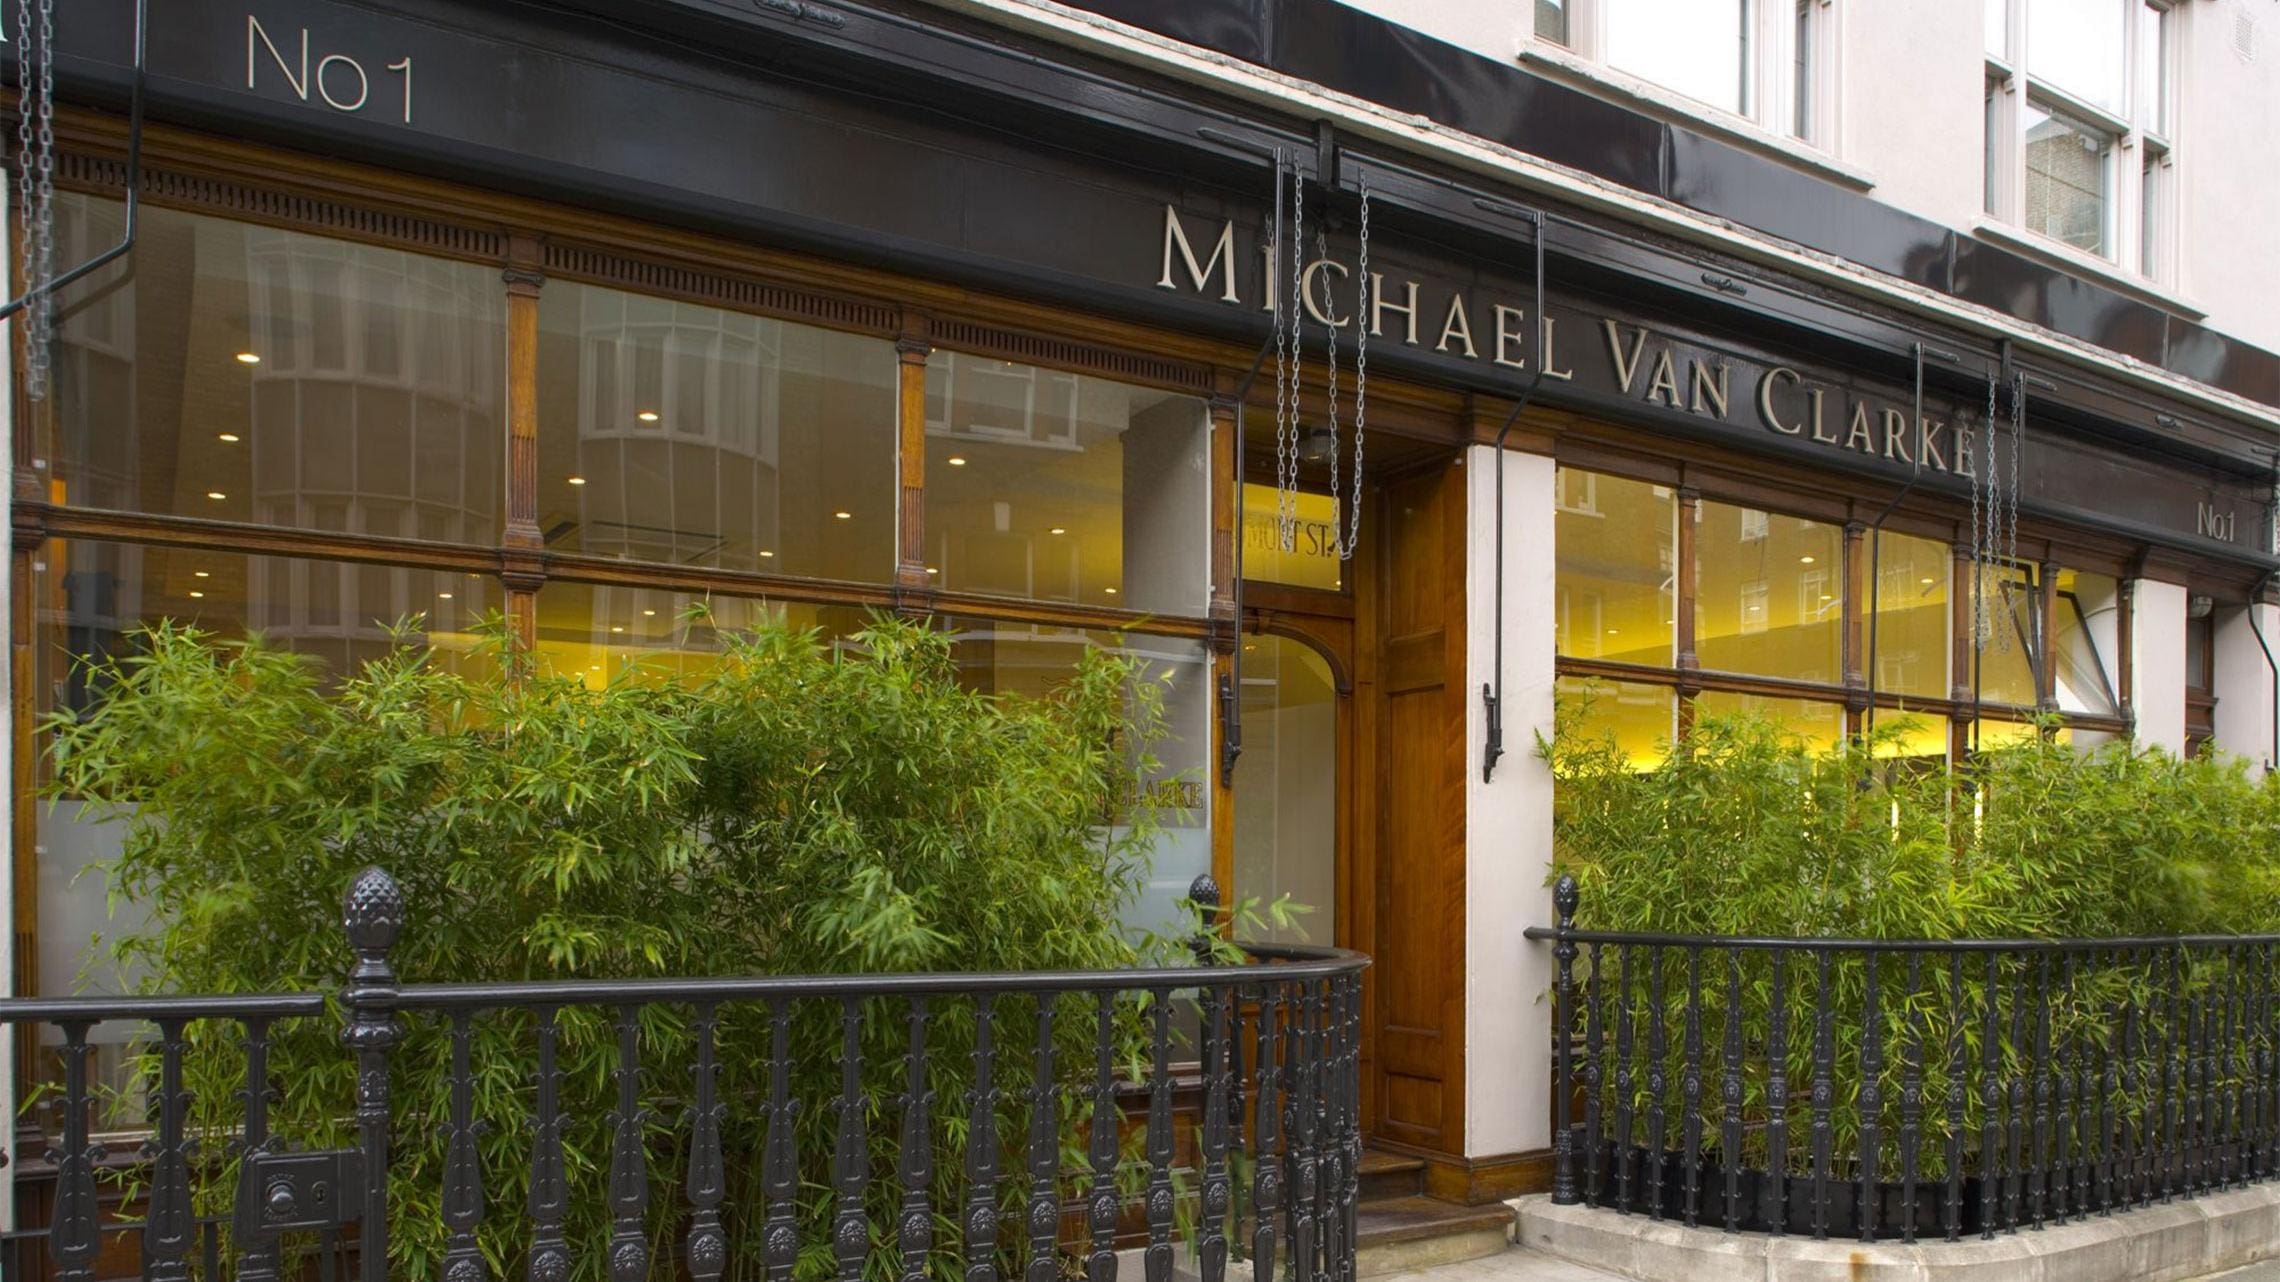 Michael Van Clarke Hair Salon, Marylebone: A Cut Above – Luxury London